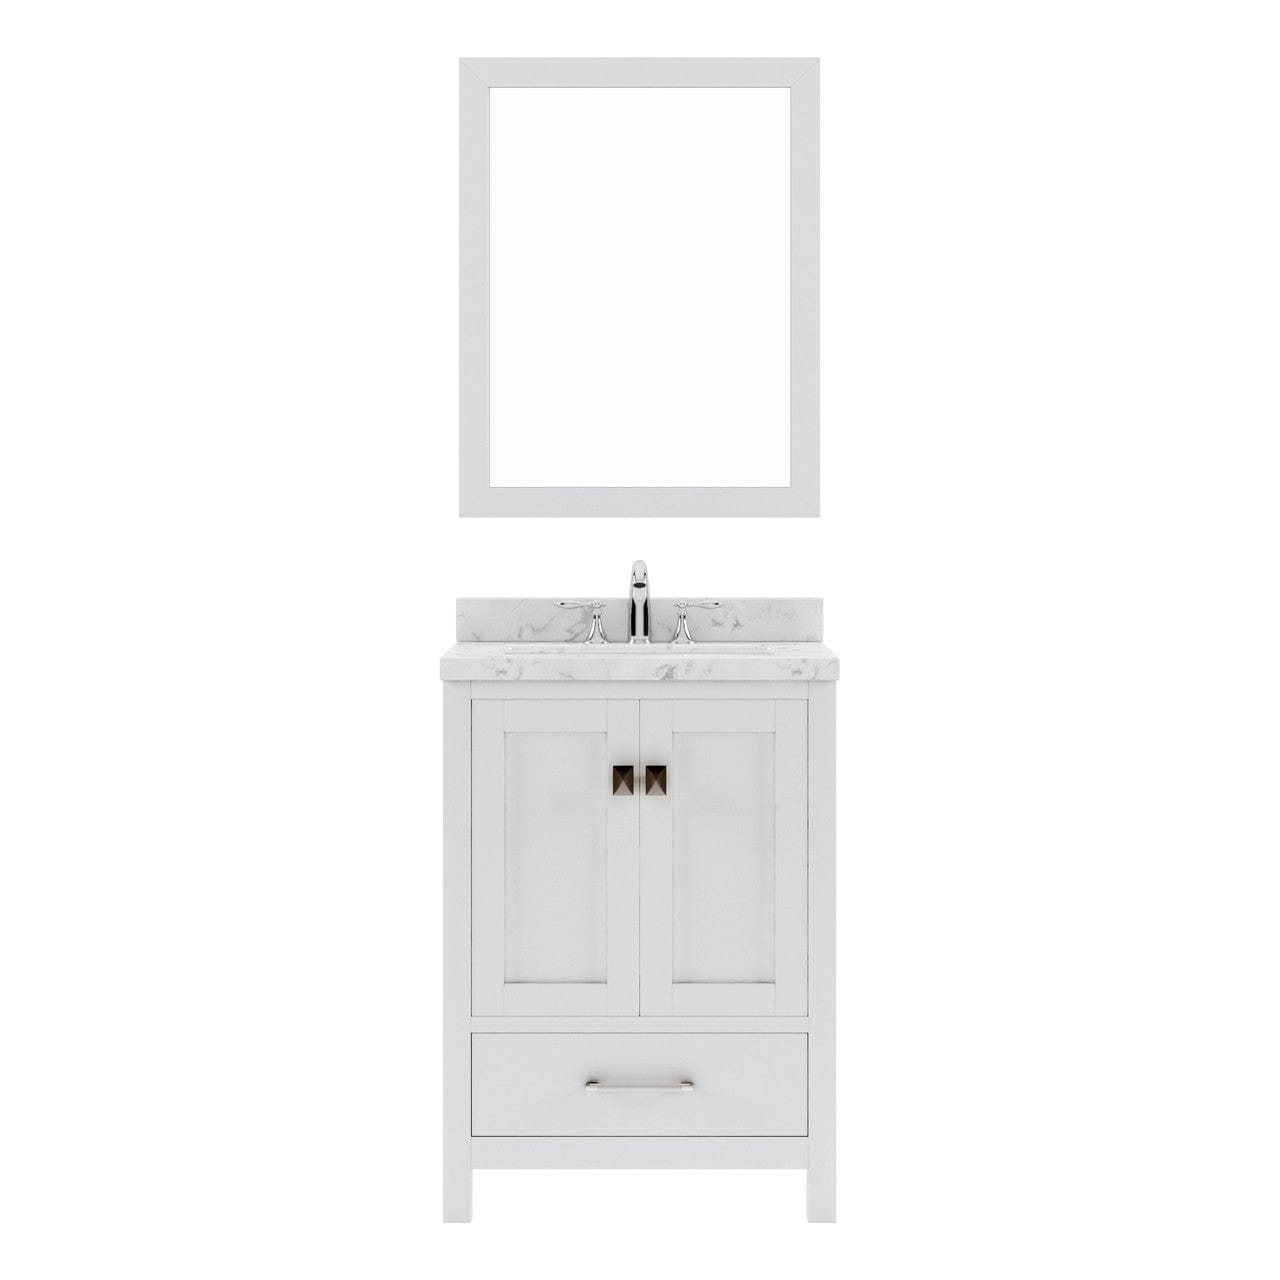 Caroline Avenue 24" Single Bath Vanity in White with White Quartz Top and Sink white background